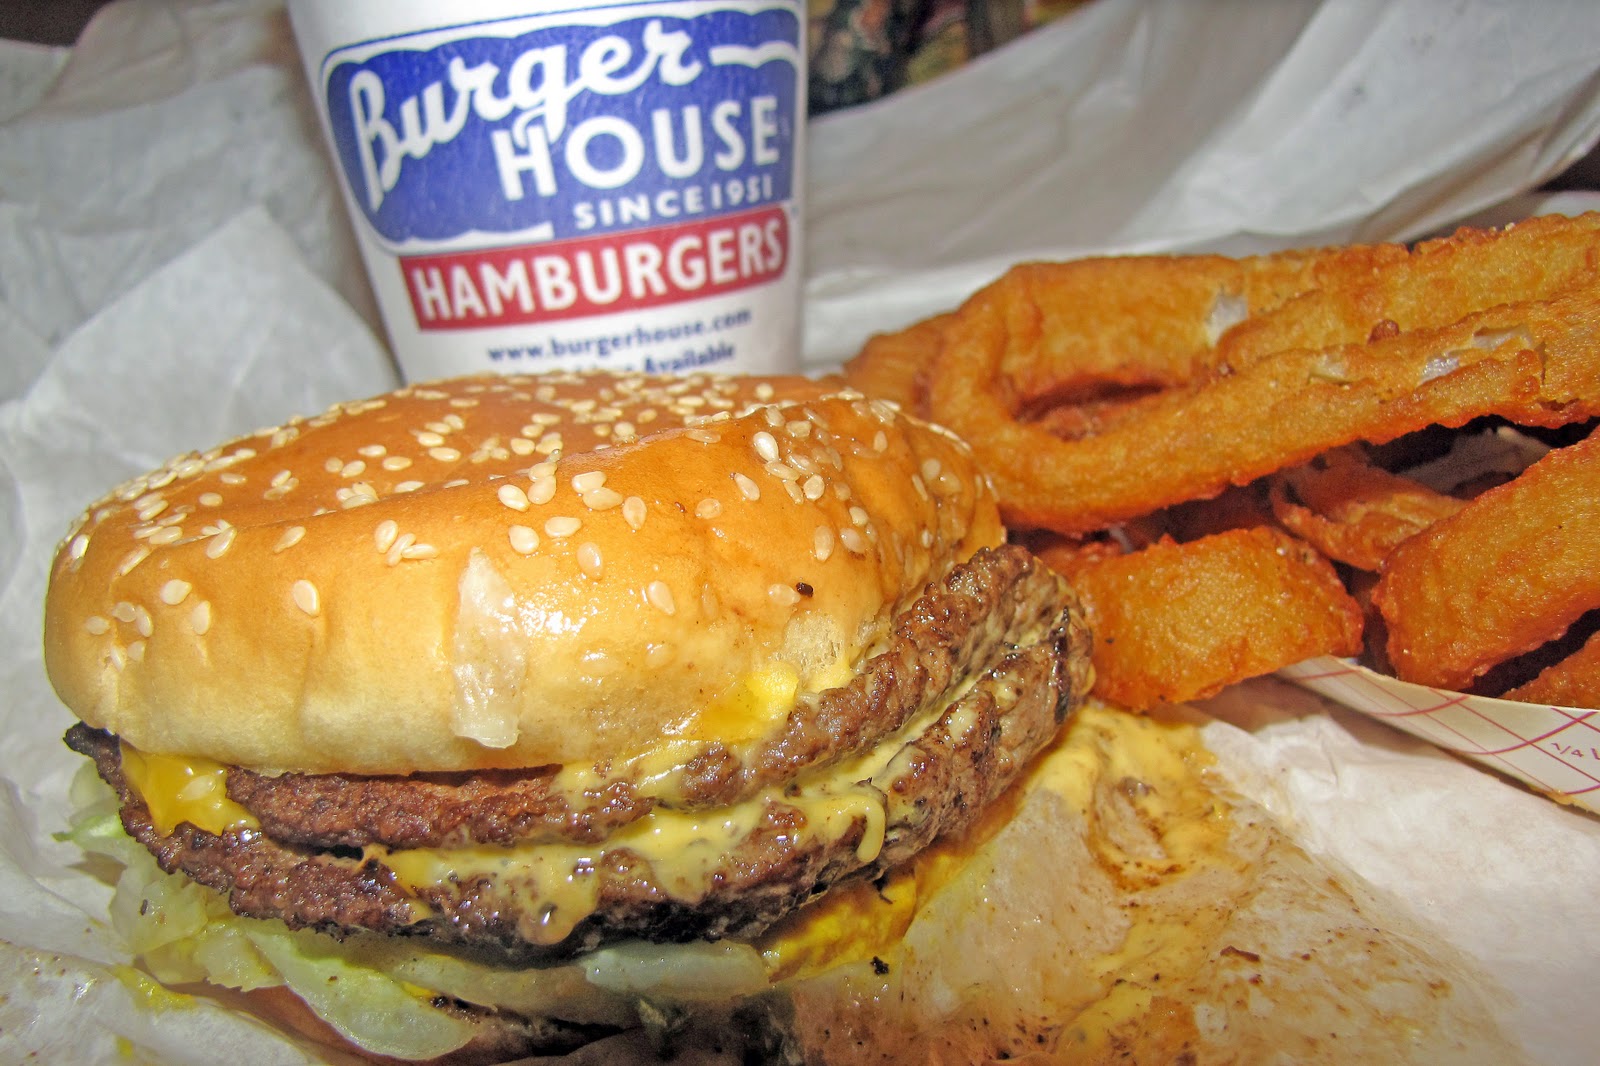 livin tejas: Burger House Hamburgers: A Dallas Staple SInce 1951